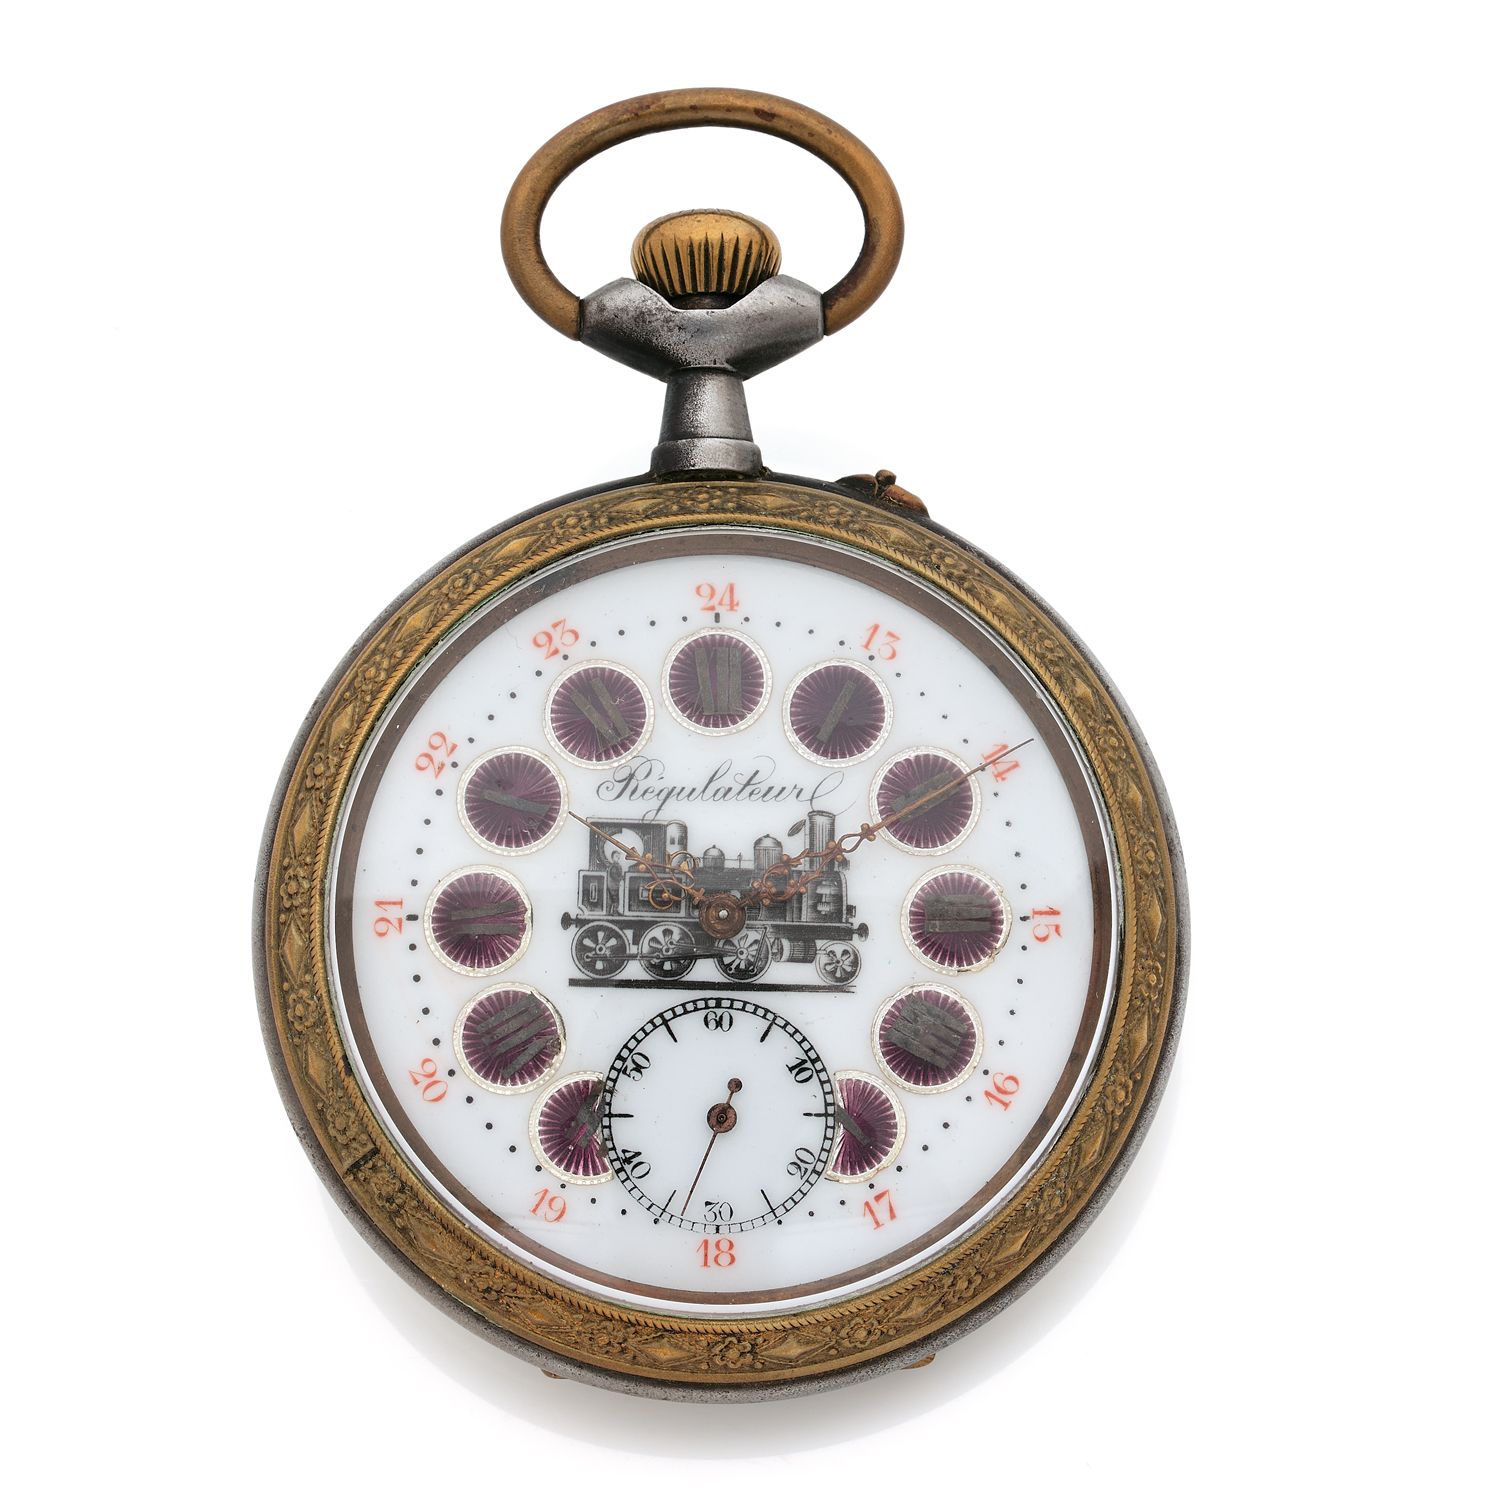 Null REGULATOR
Circa: 1900.
24 hours regulator gousset watch in steel. Engraved &hellip;